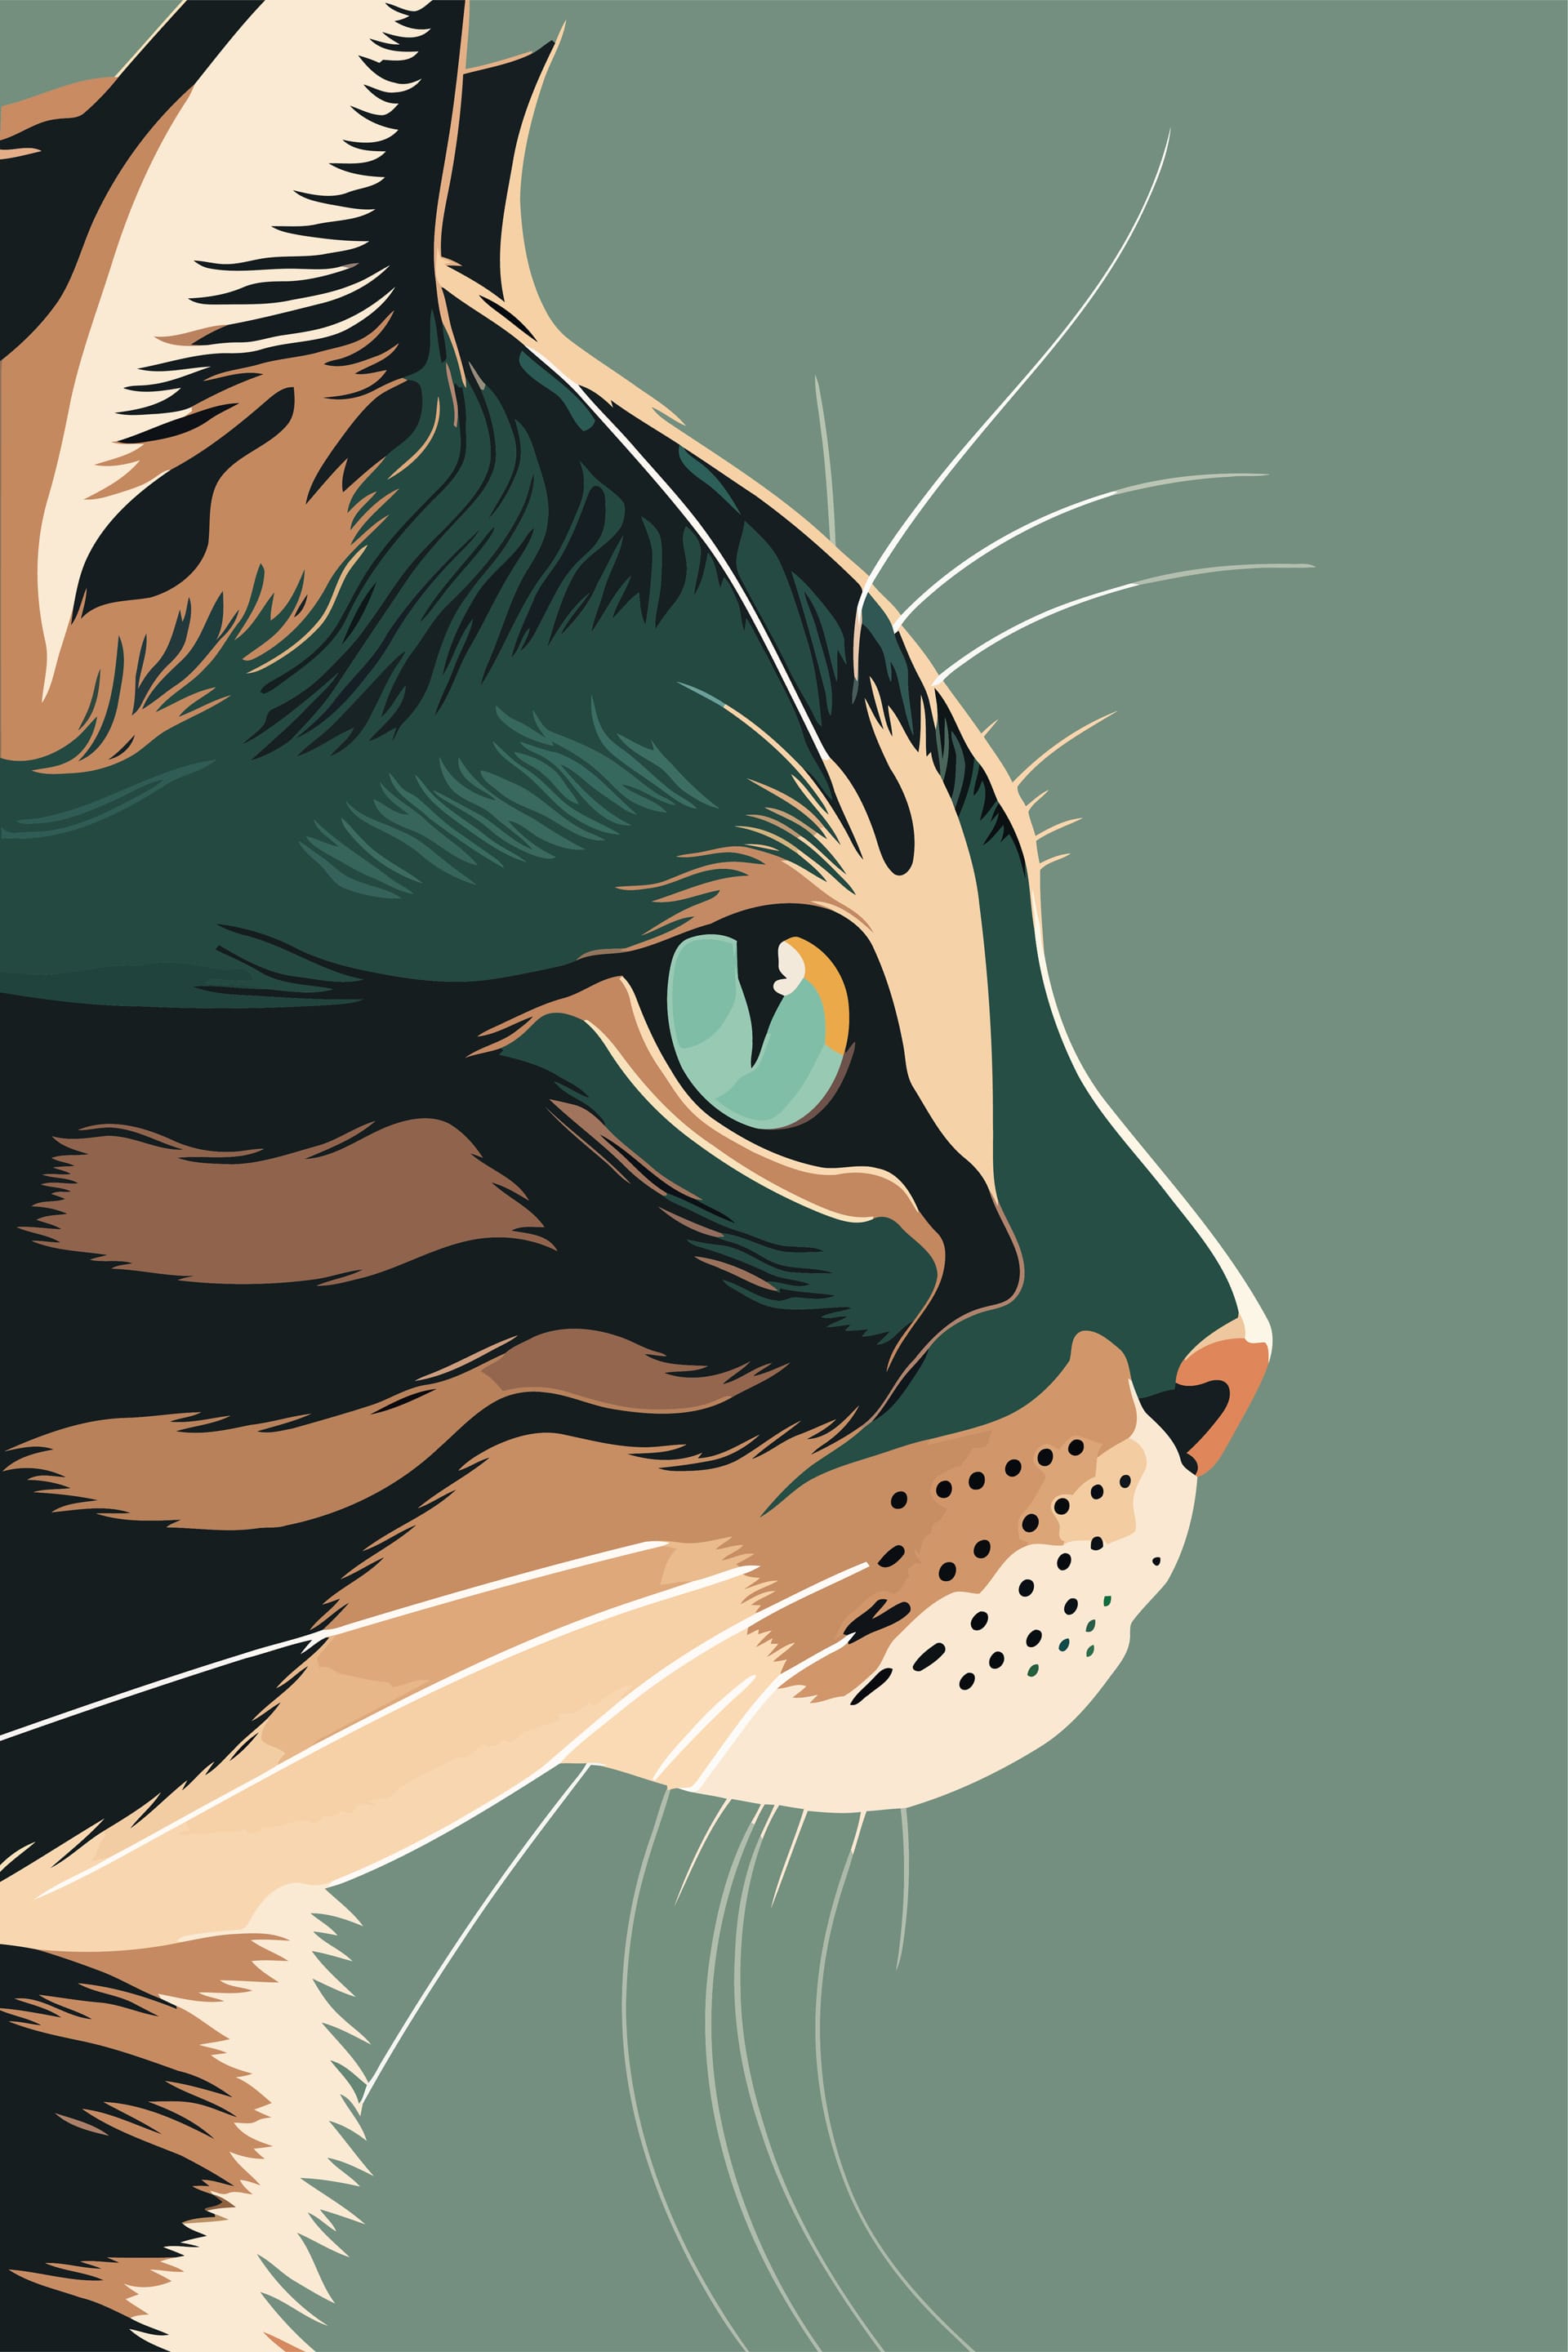 Portrait cat with green eyes illustration retro style